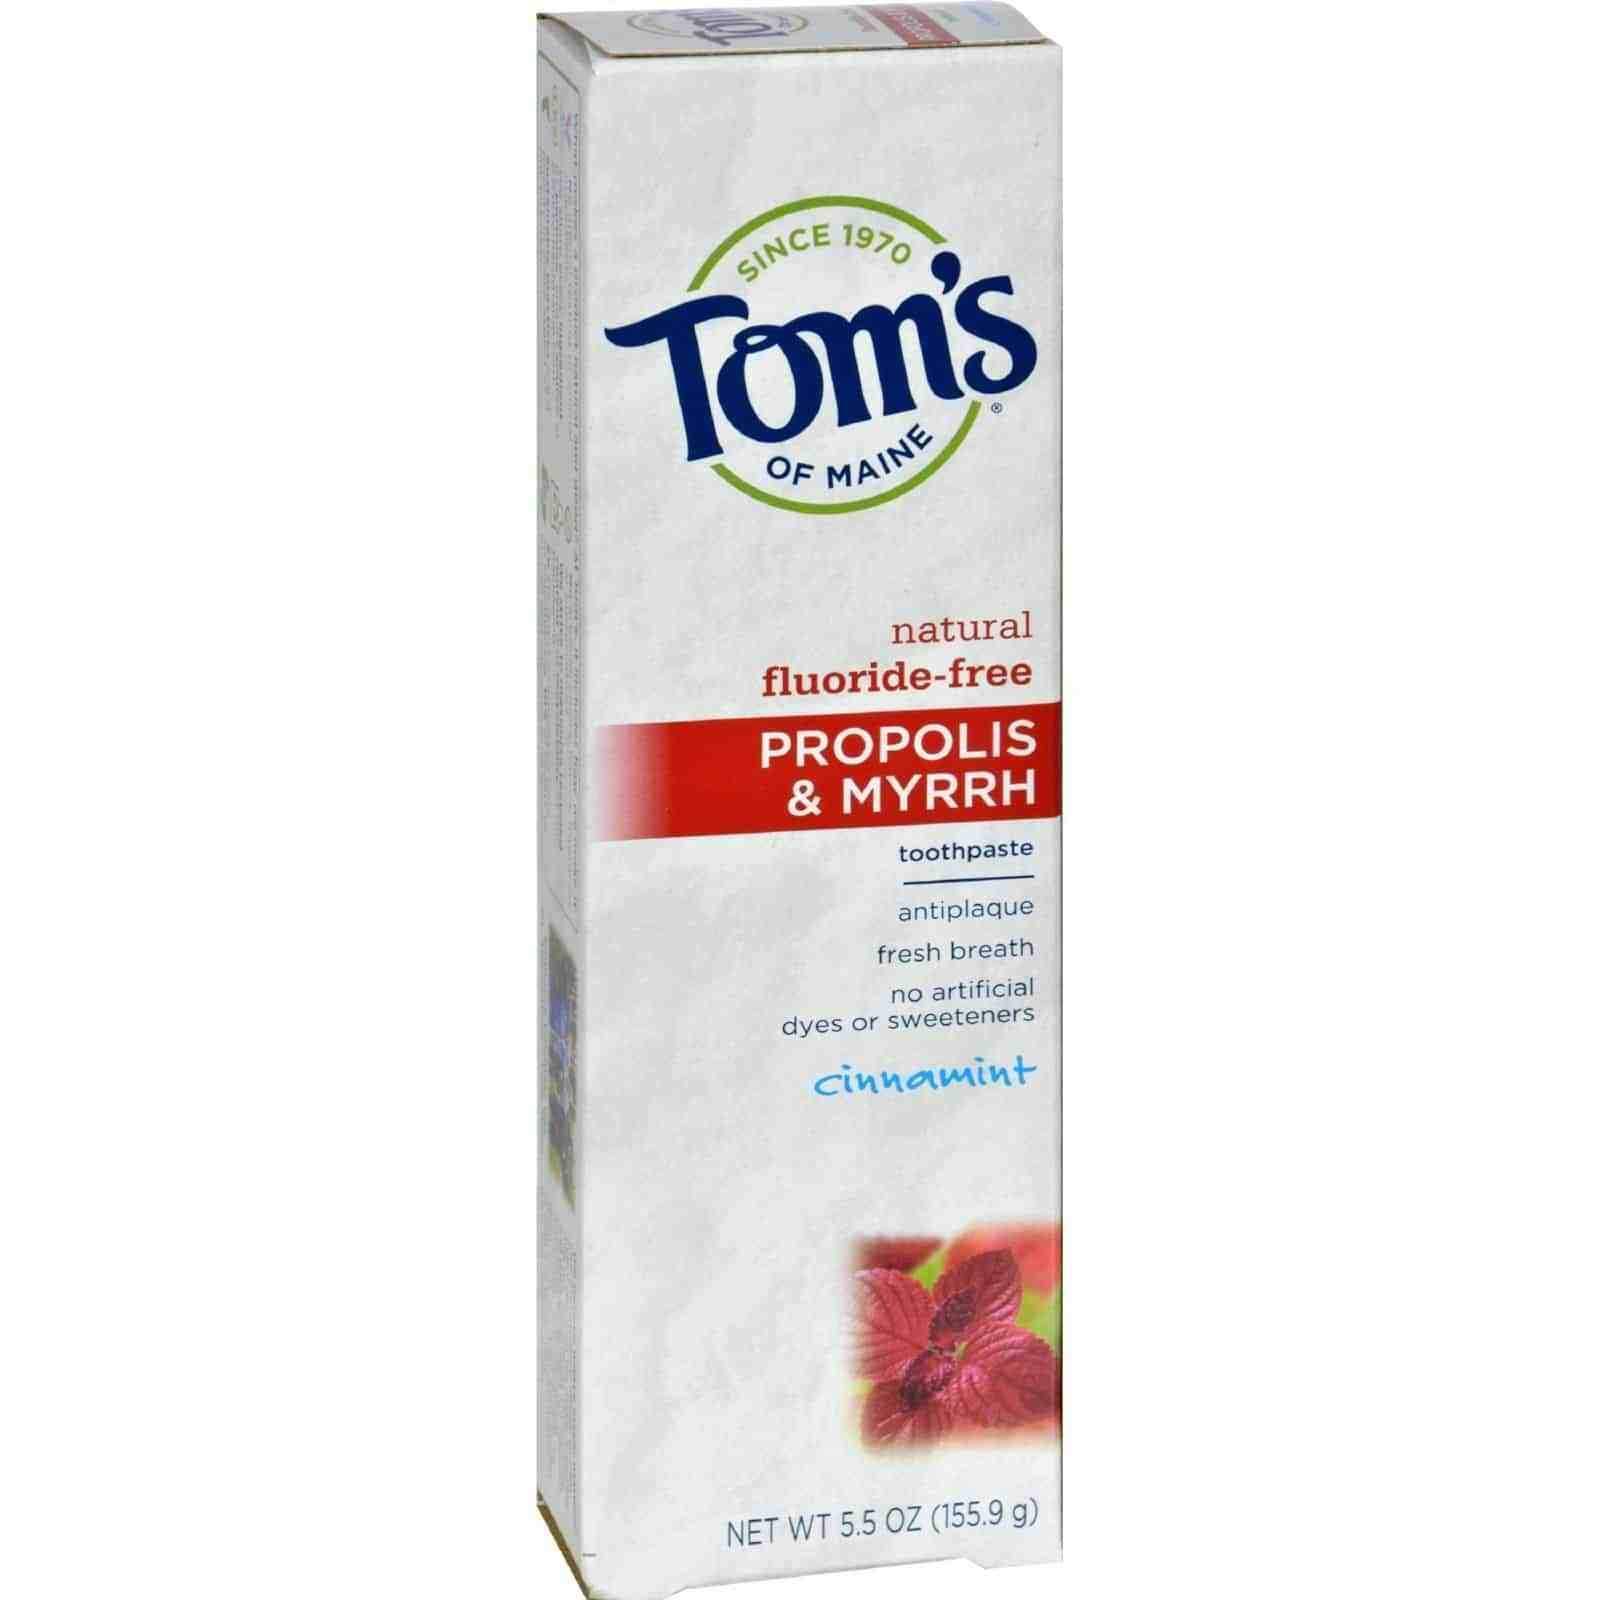 Tom's of Maine Propolis and Myrrh Fluoride-Free Cinnamint Toothpaste - 5.5oz